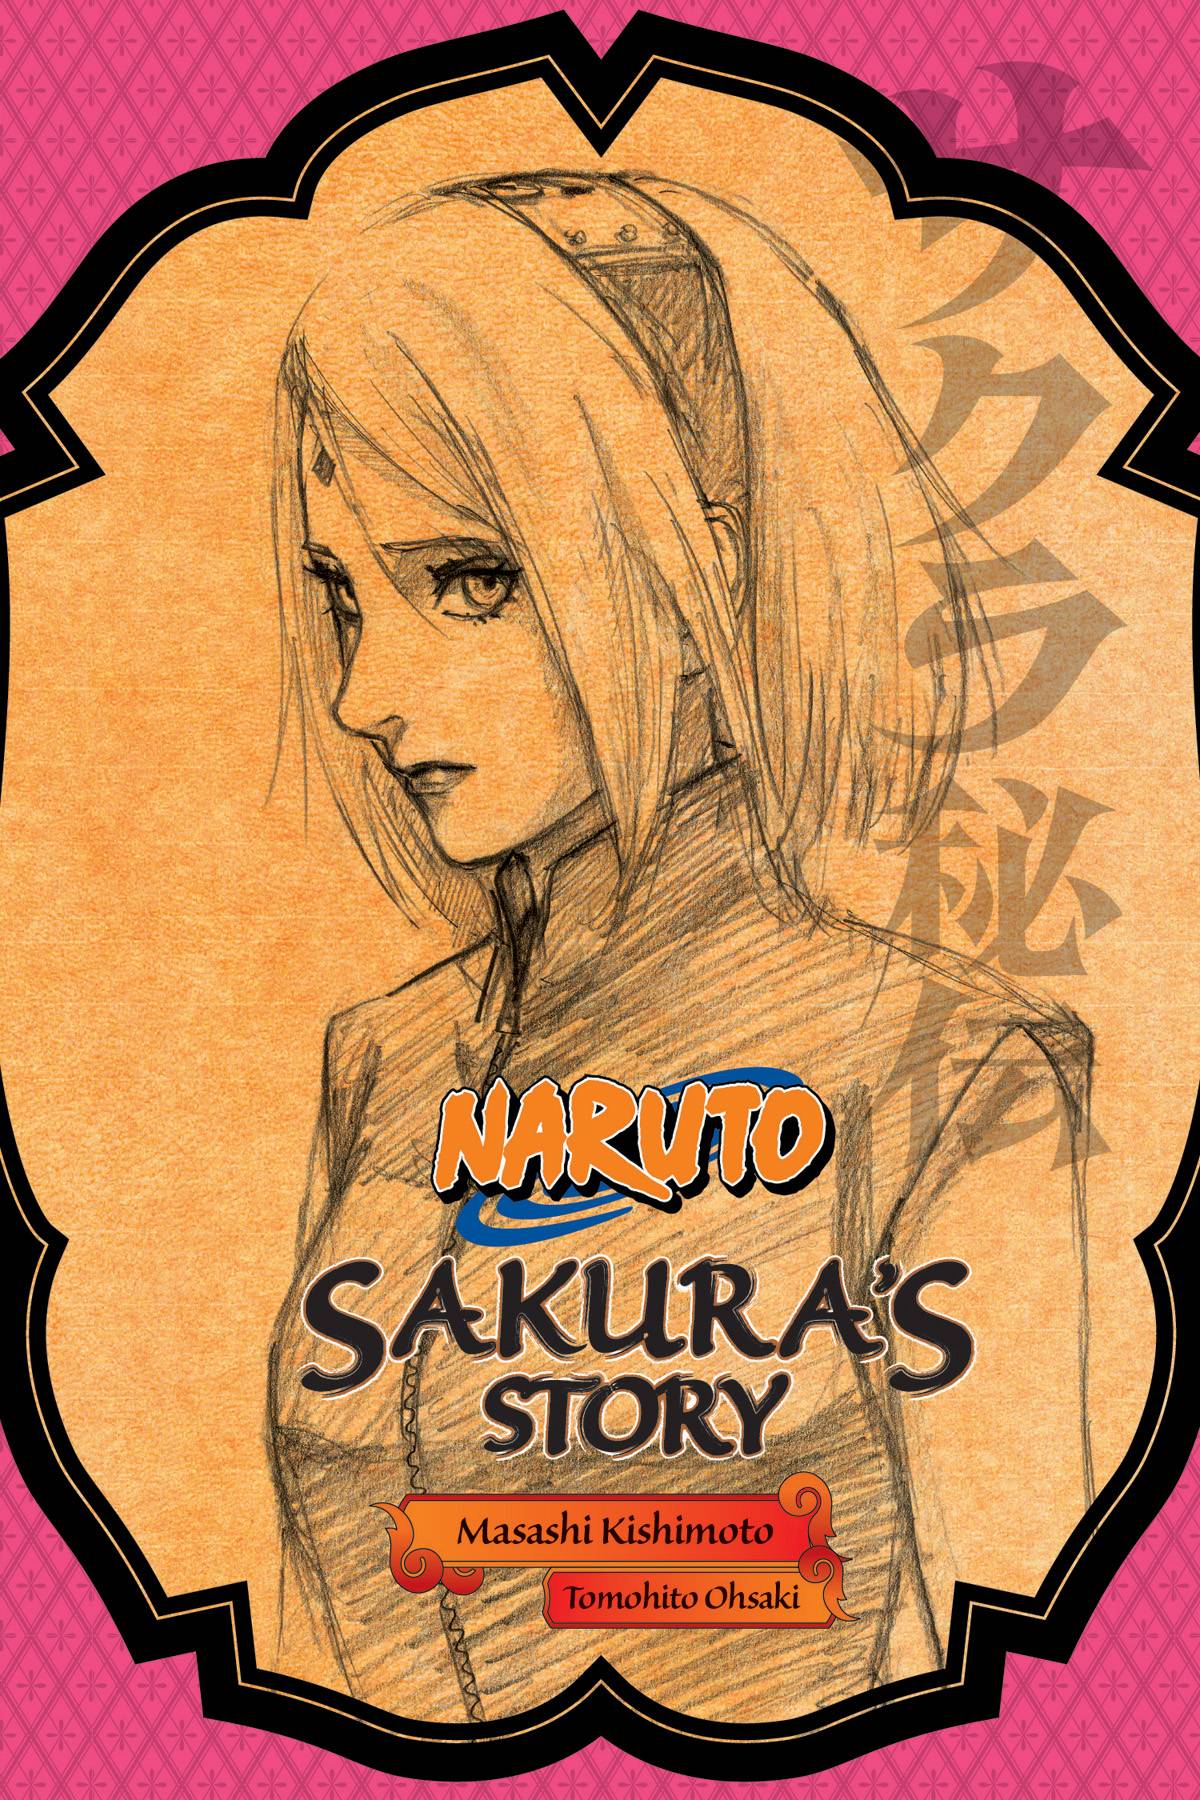 Naruto Sakura Story Soft Cover Novel